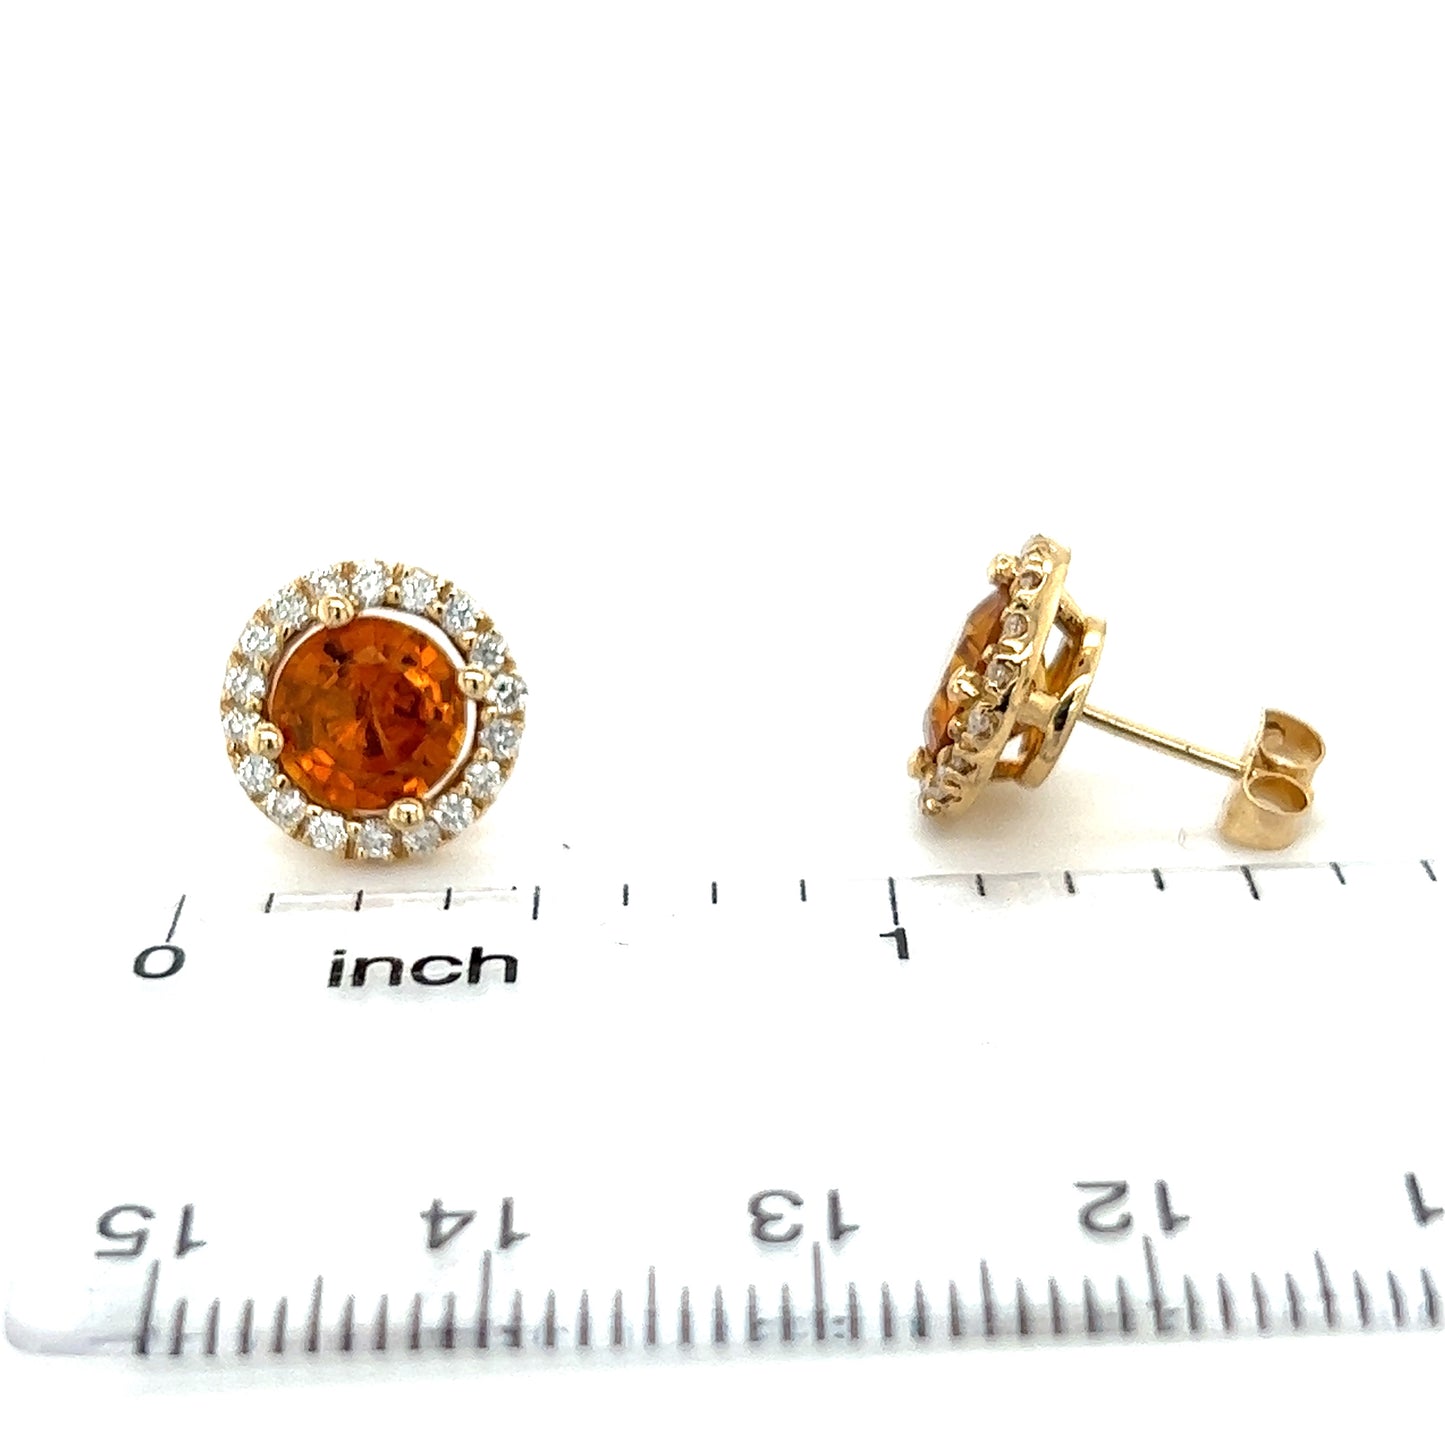 Natural Orange Sapphire Diamond Stud Earrings 14k WG 3.54 TCW Certified $5,975 216662